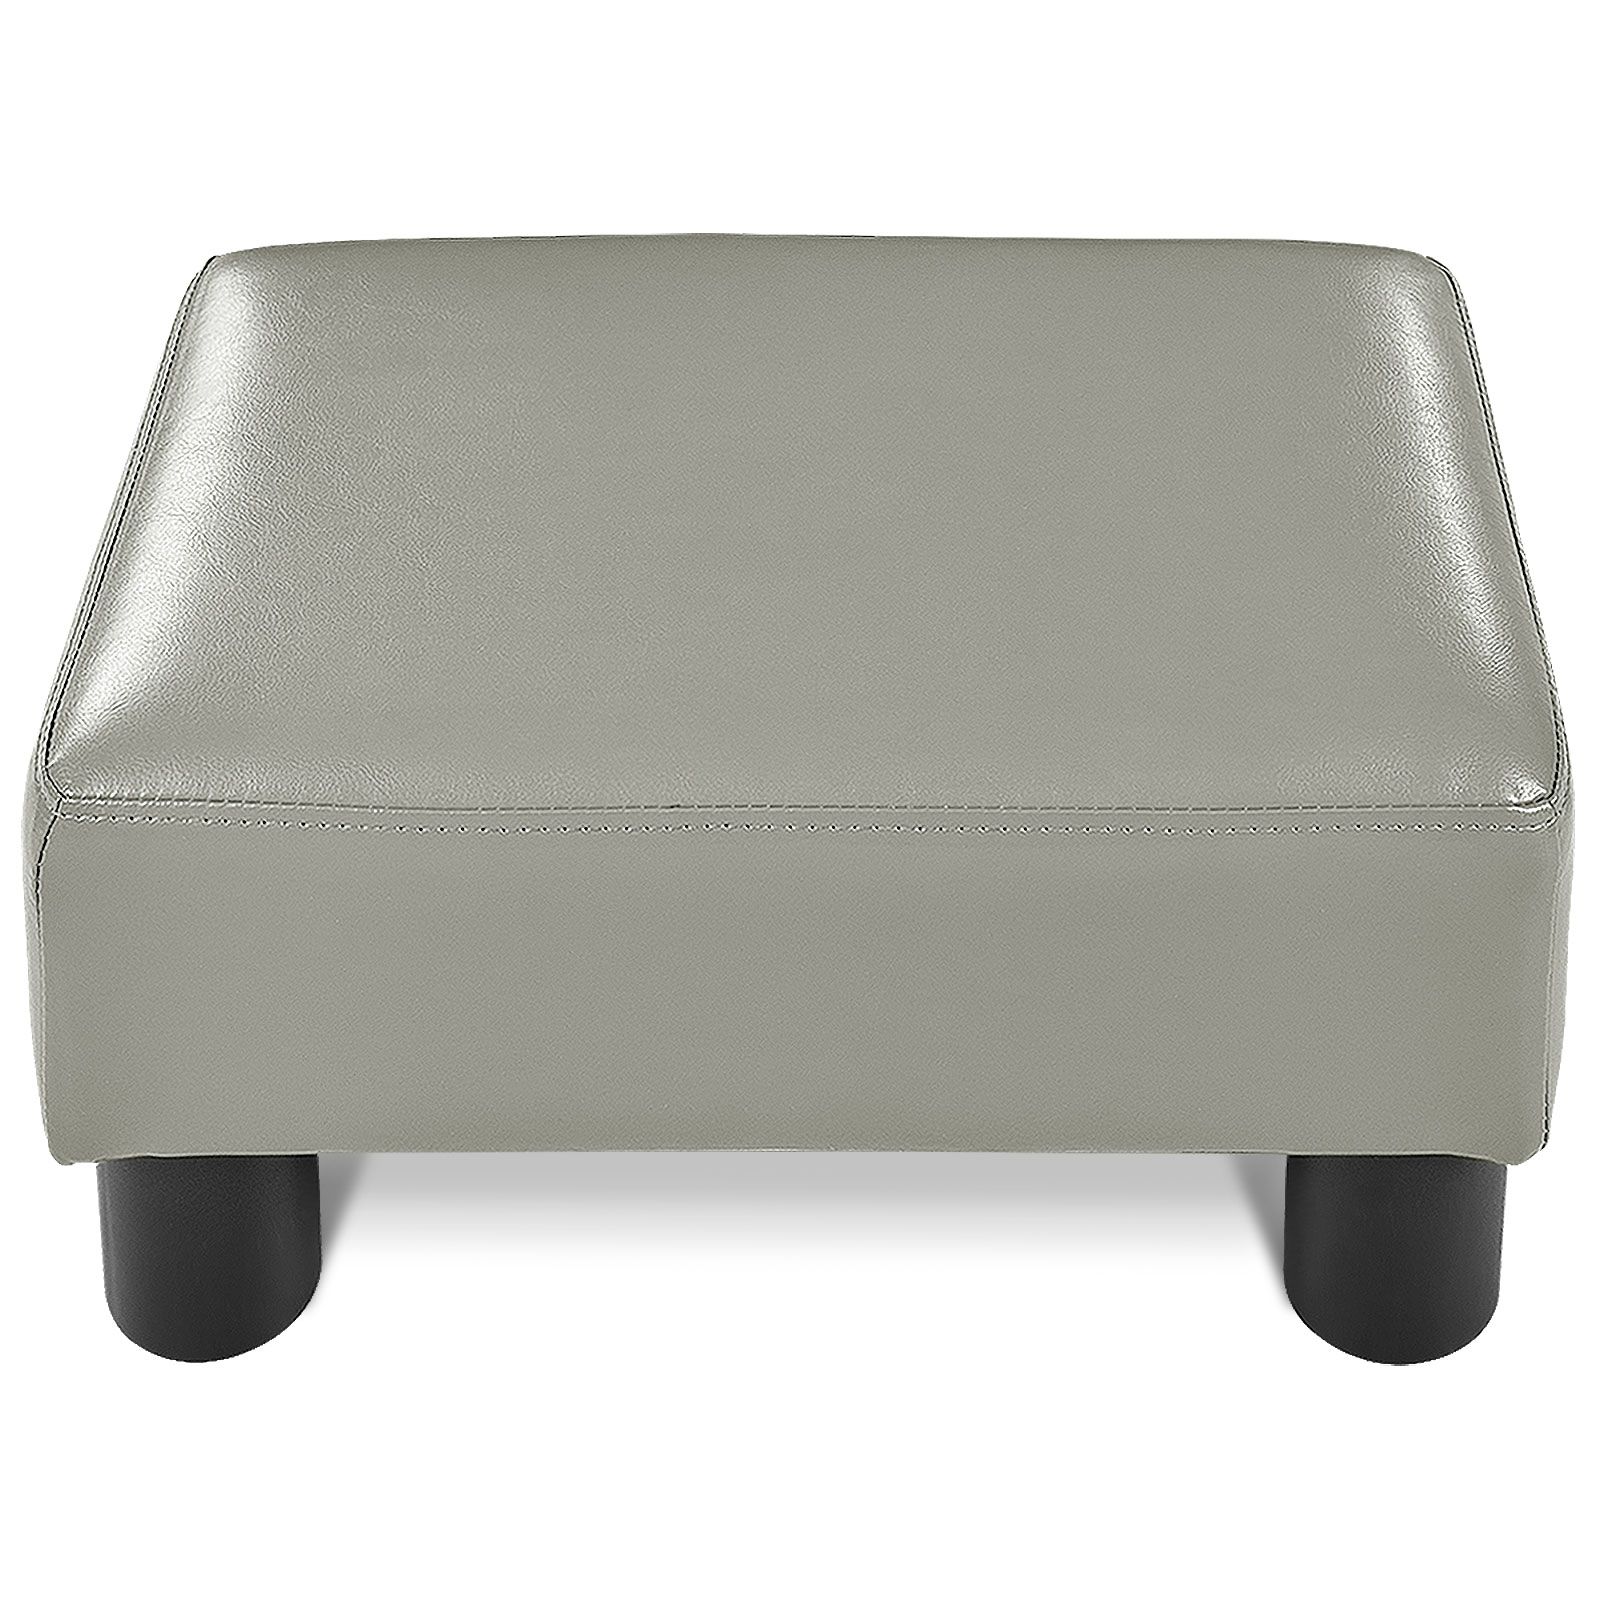 40 cm Rectangle PU Leather Small Footstool Ottoman Grey